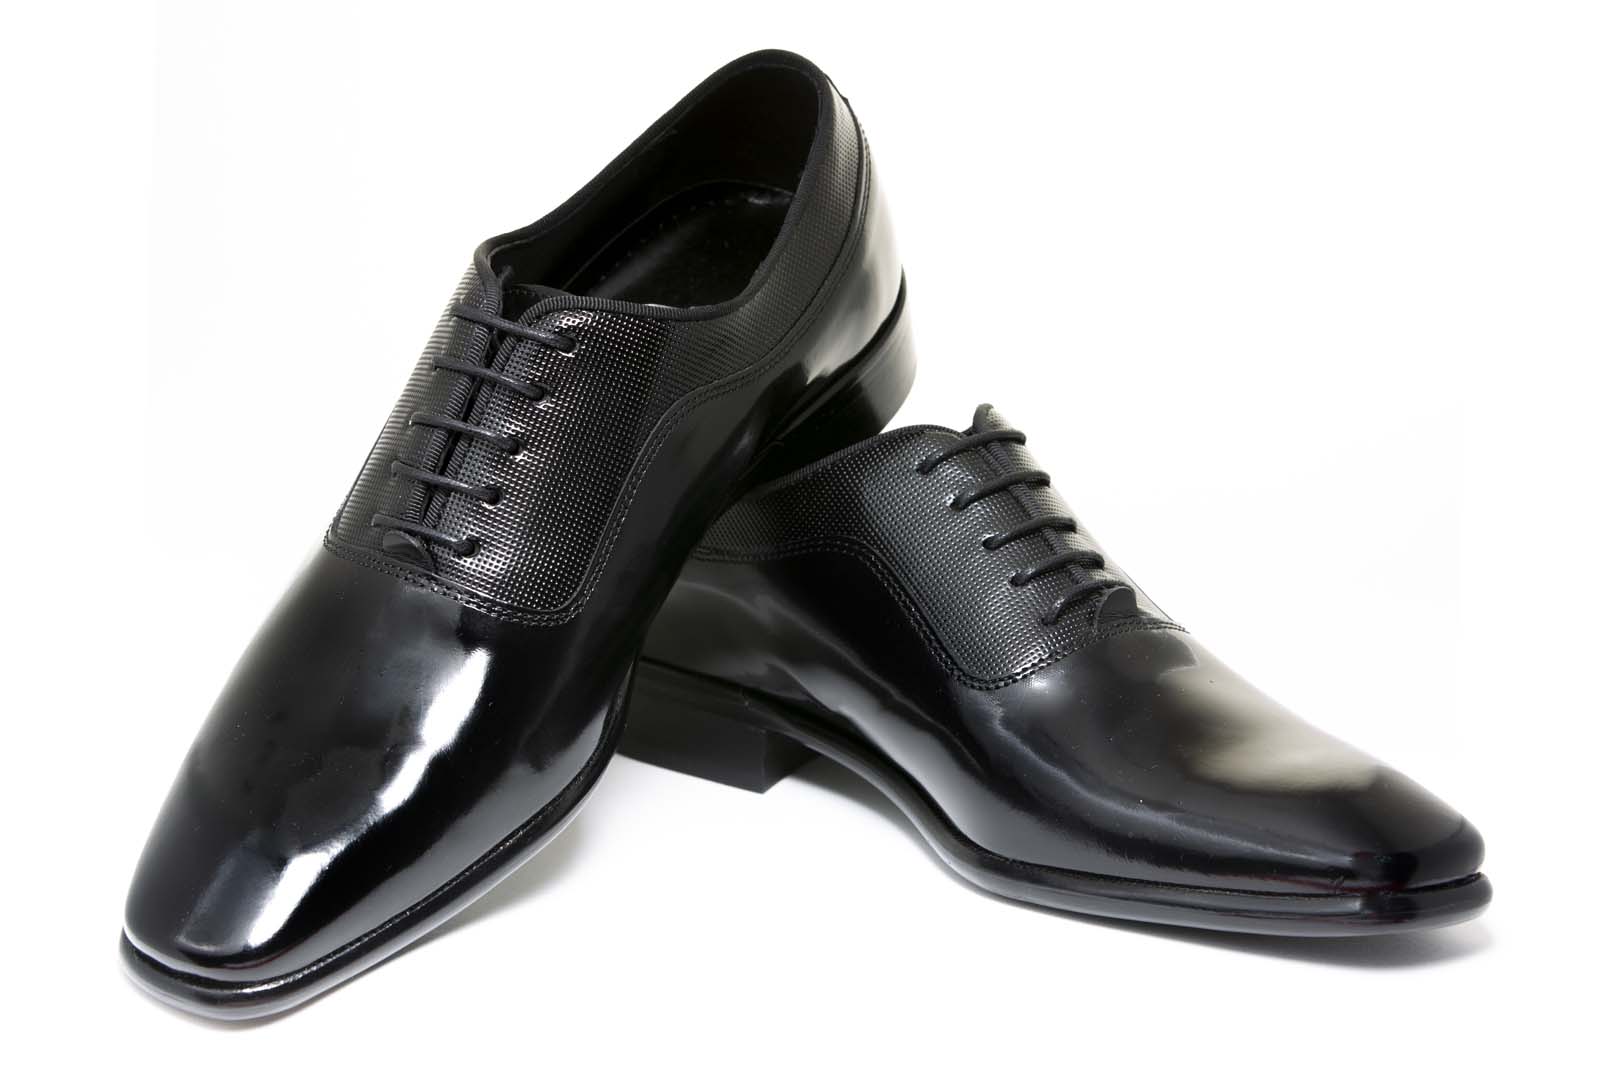 Zapato modelo Oxford piel lisa color negro